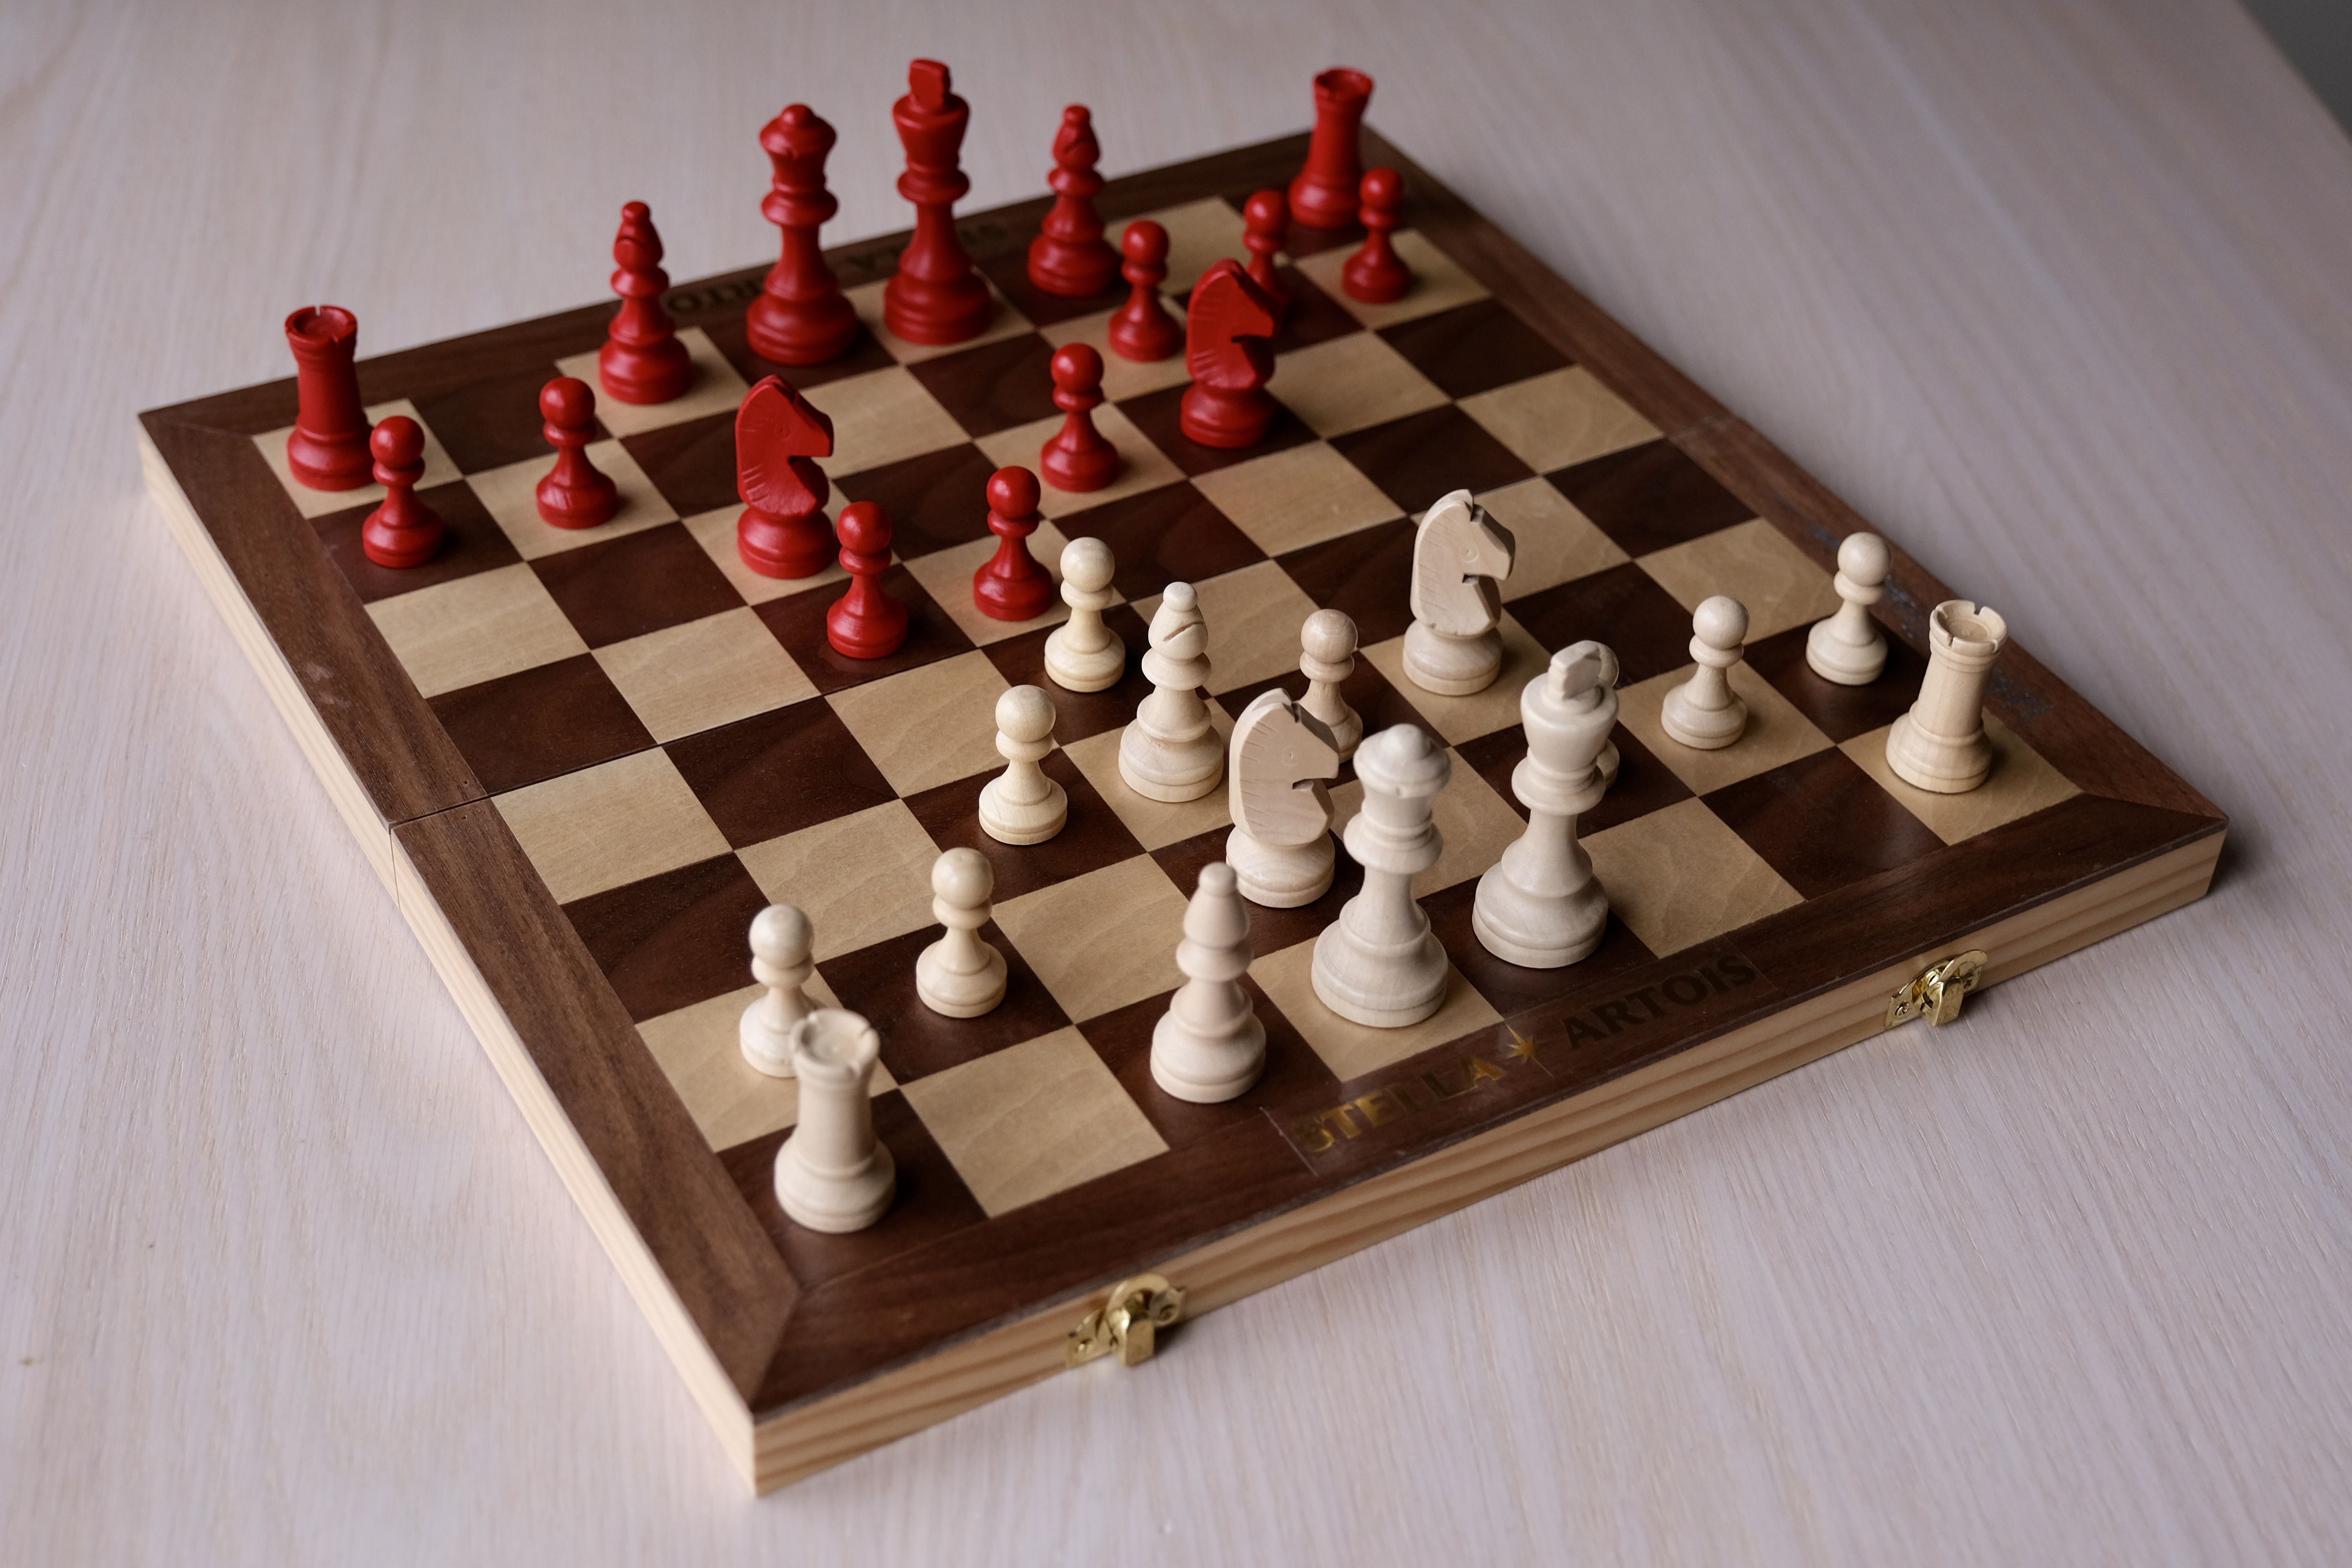 GM Hikaru Nakamura autographed chess board Twitter prize - Chess